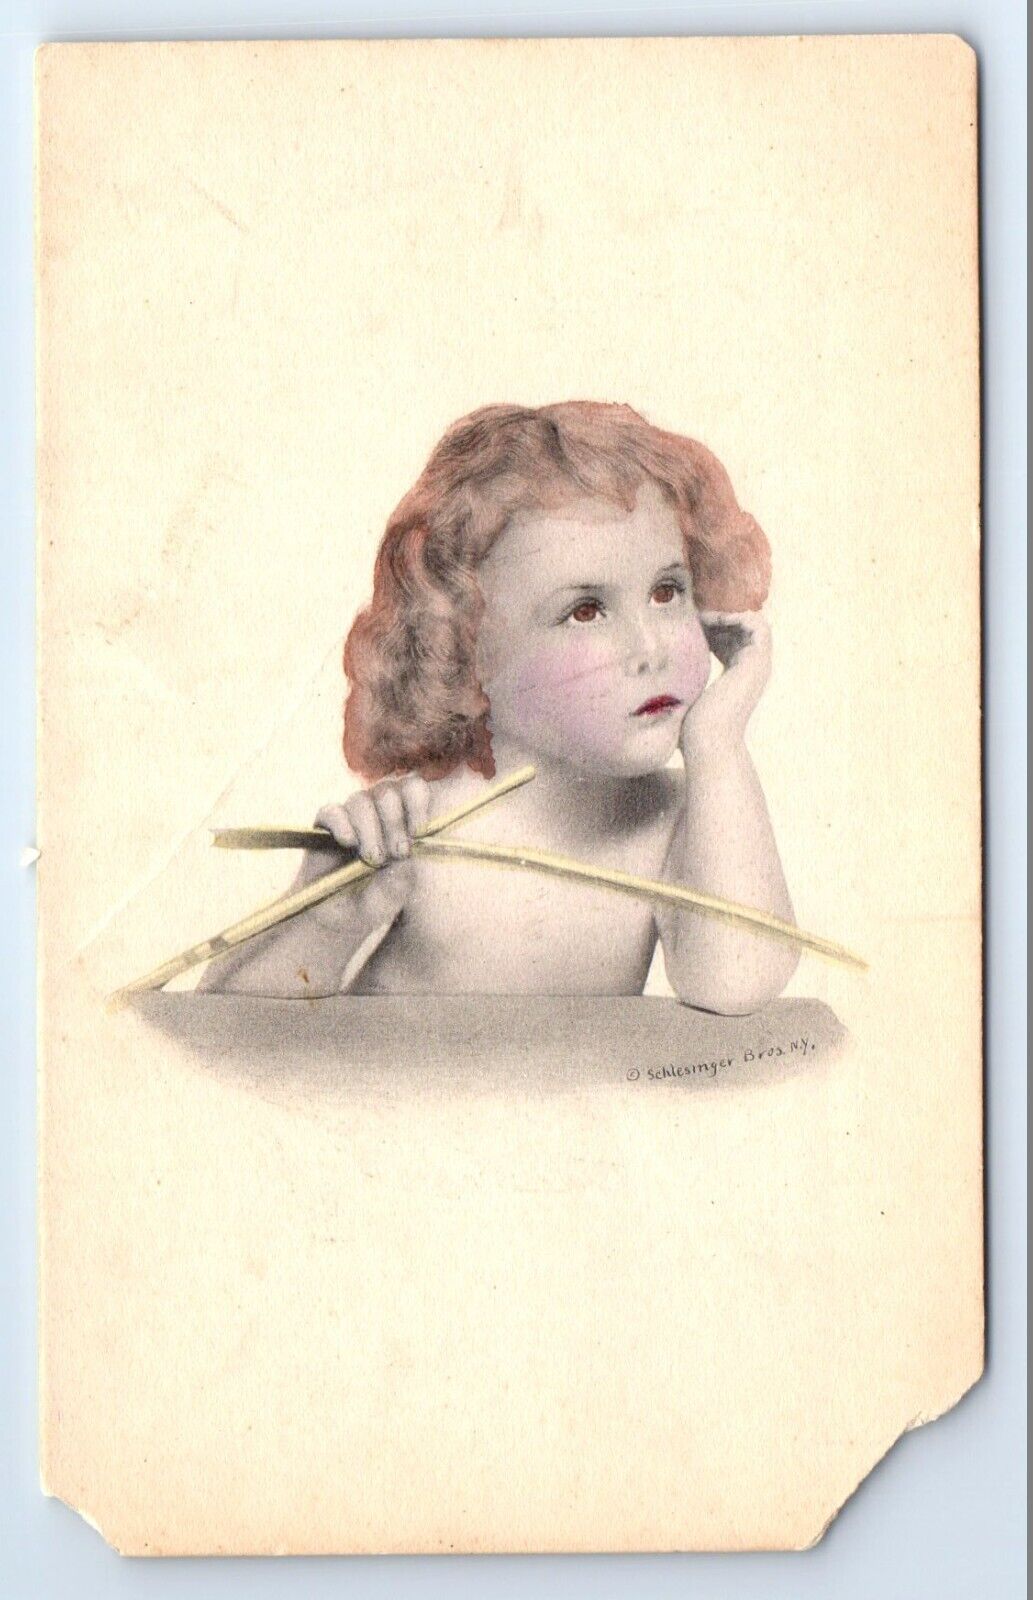 Young Child Portrait Colorized Postcard c.1910 Schlesinger New York NY Damaged